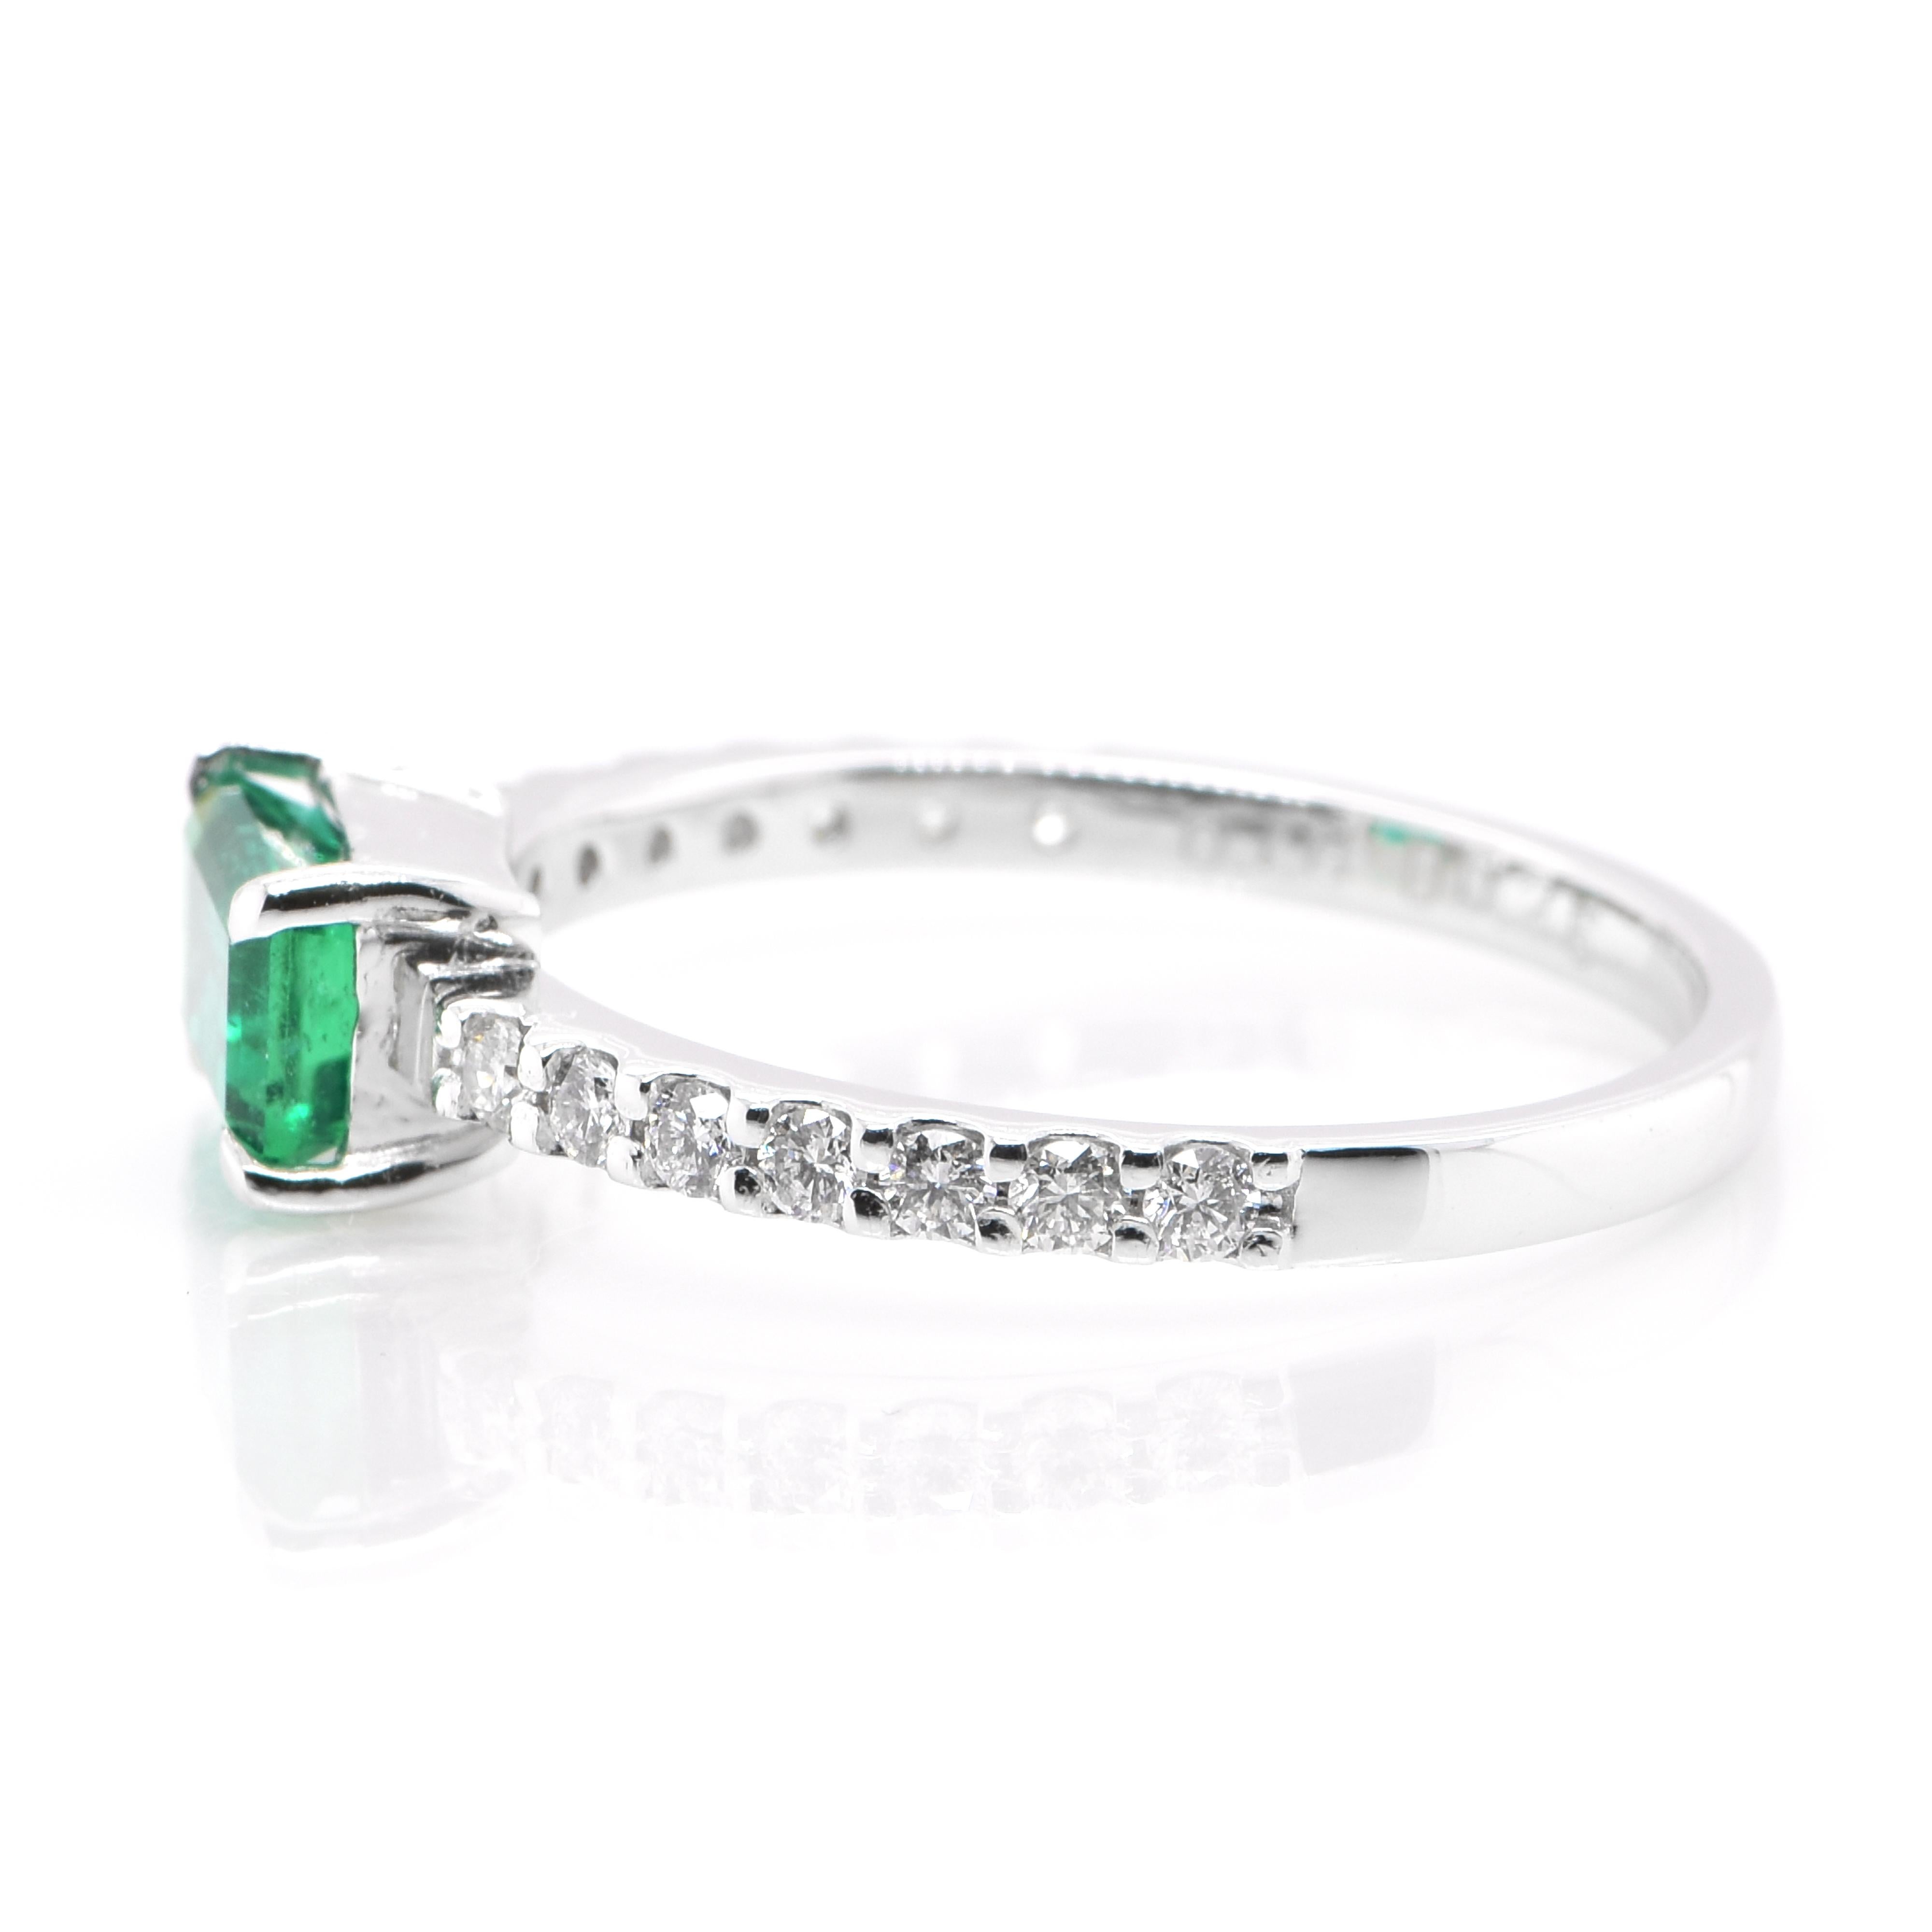 Emerald Cut 0.78 Carat, Natural, Emerald and Diamond Engagement Ring Set in Platinum